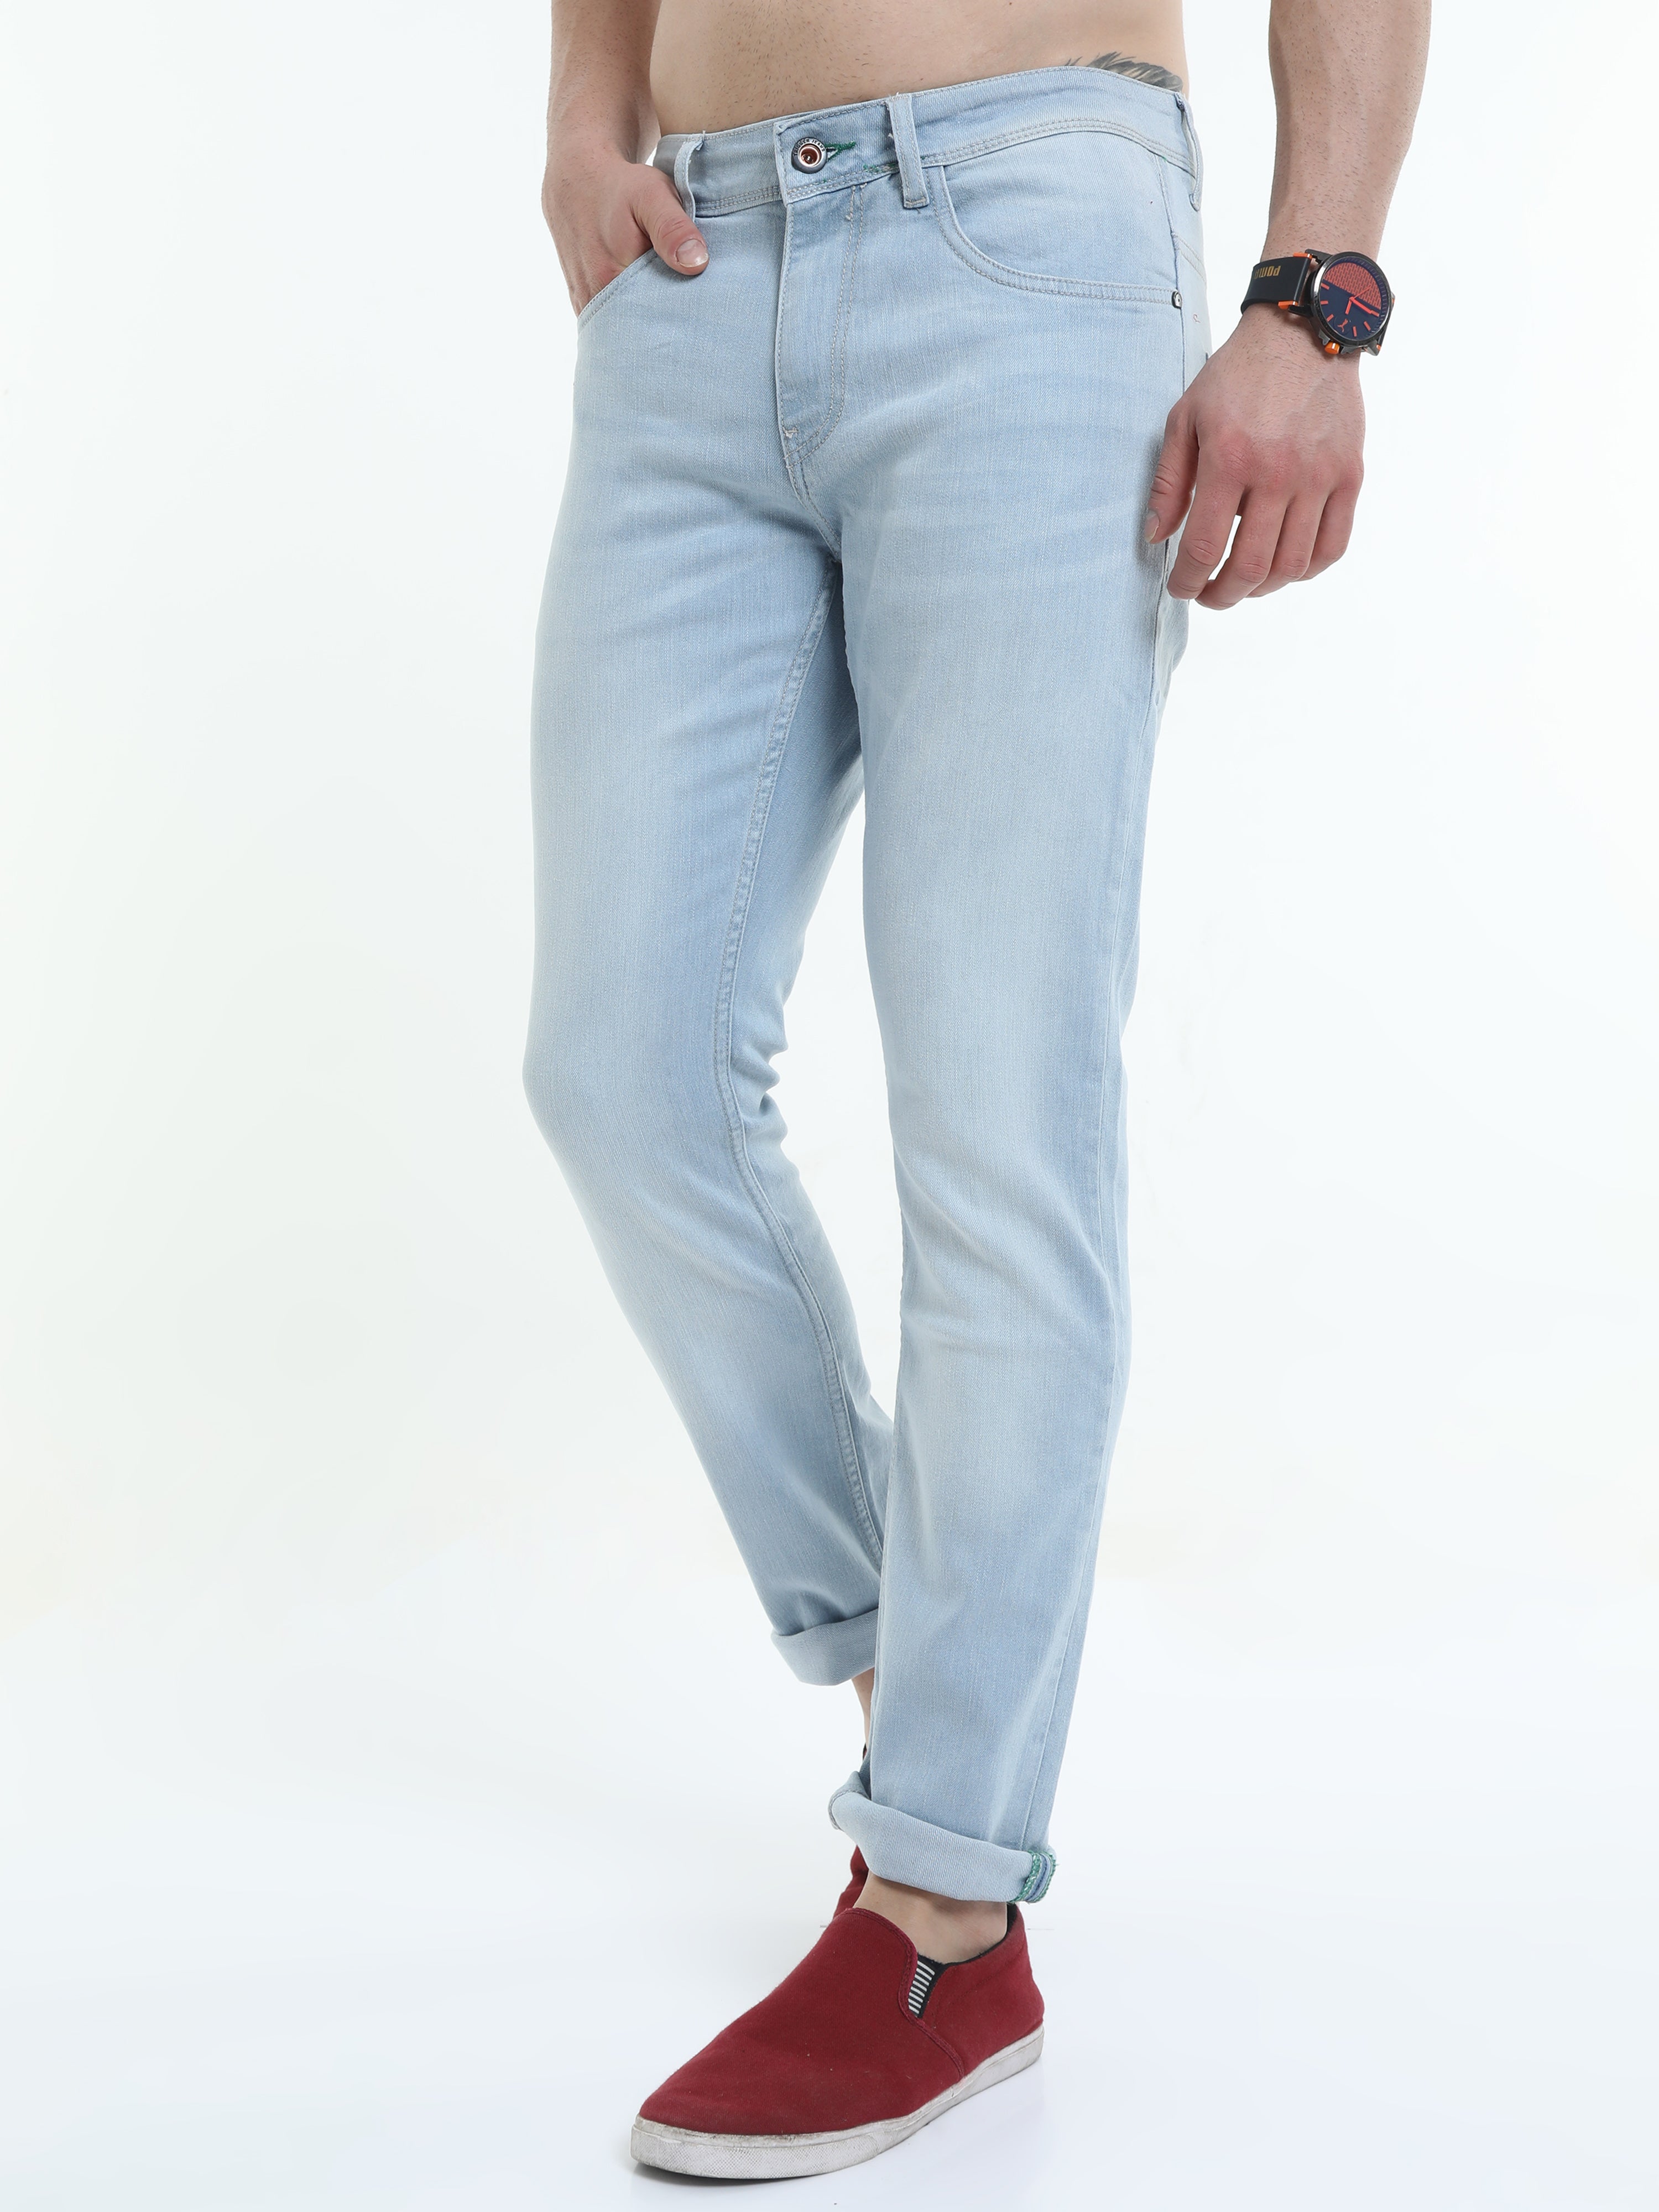 Elegance Slim Men's Slim Fit Blue Jeans